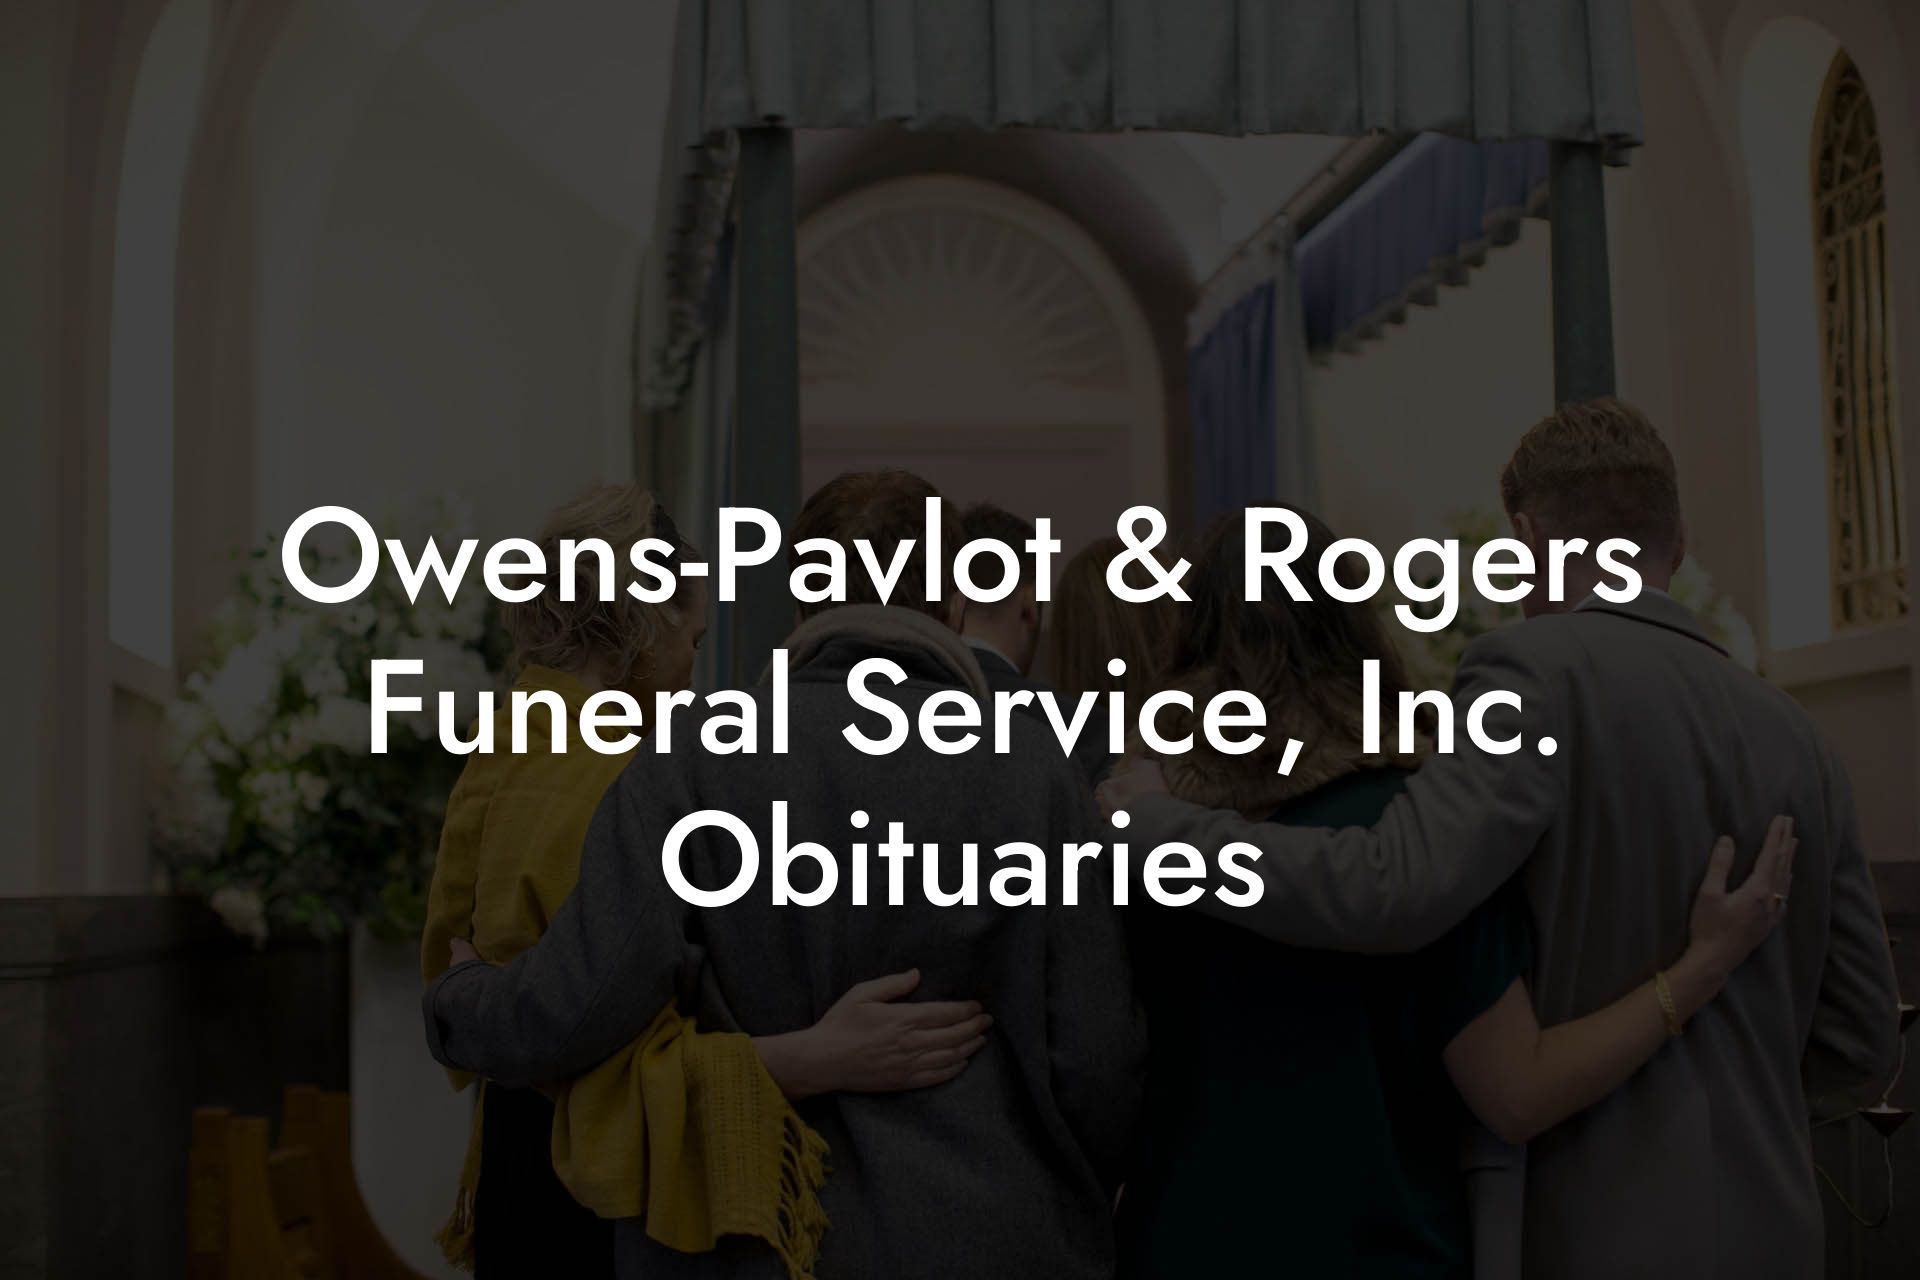 Owens-Pavlot & Rogers Funeral Service, Inc. Obituaries